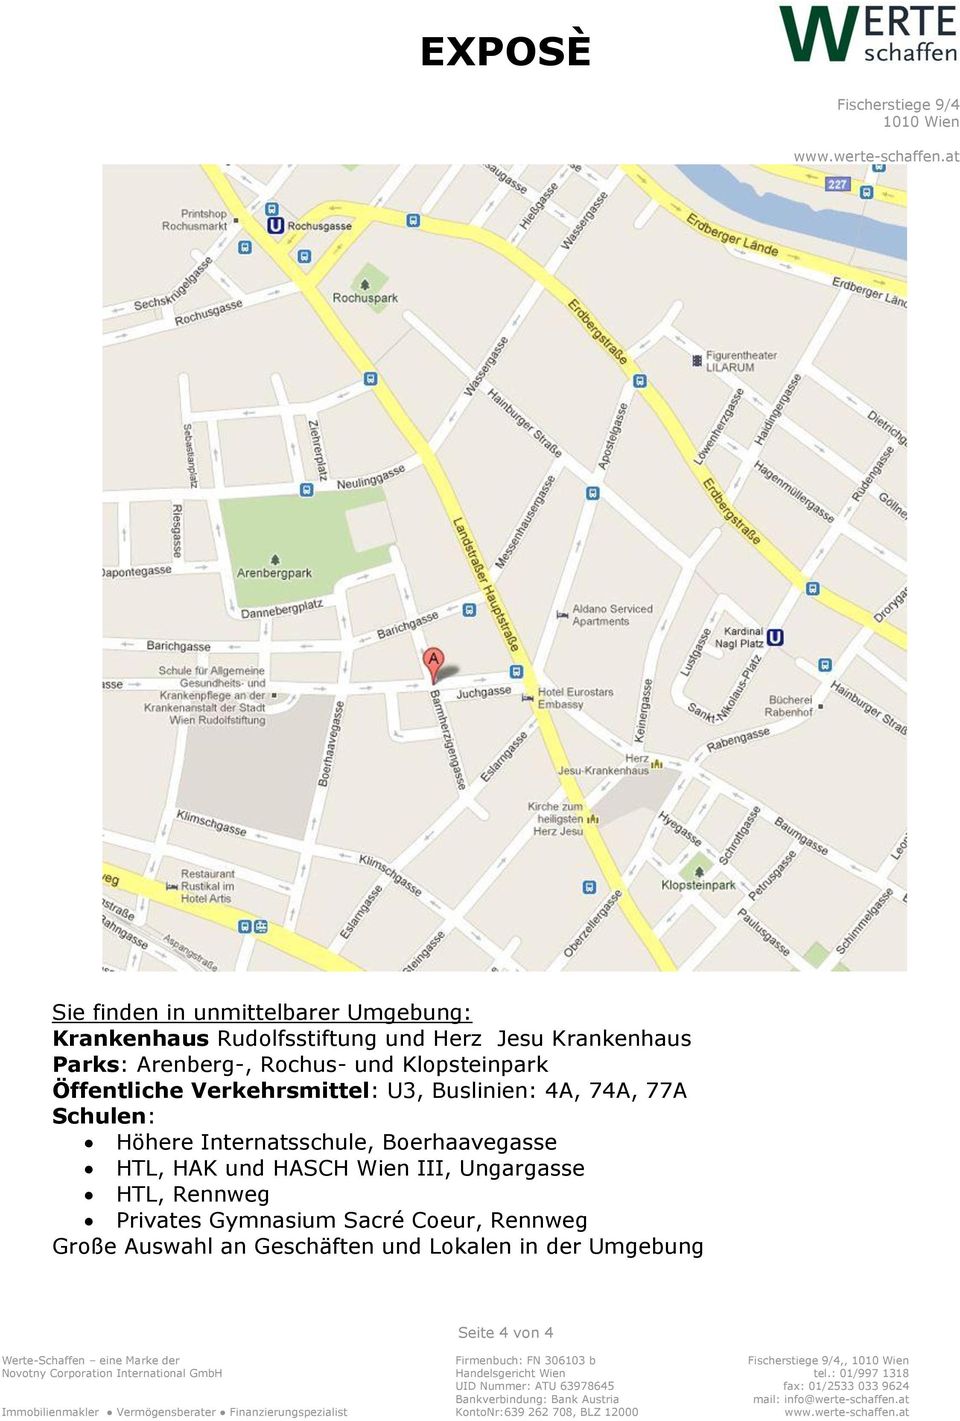 Boerhaavegasse HTL, HAK und HASCH Wien III, Ungargasse HTL, Rennweg Privates Gymnasium Sacré Coeur, Rennweg Große